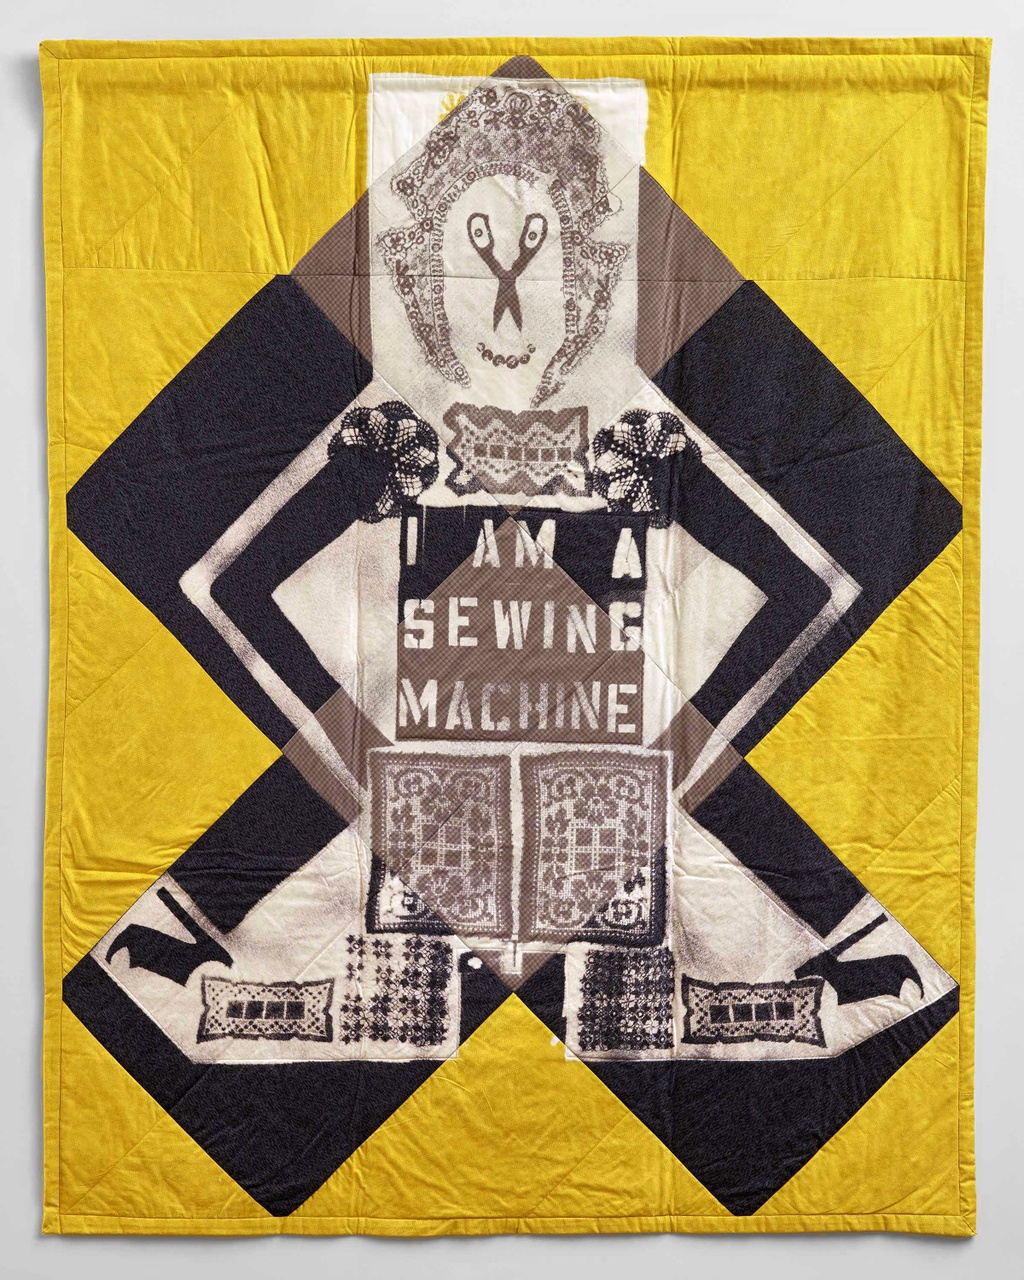 Lara Schnitger sewing machine 2012 190 x 150 cm fotograaf Joshua White